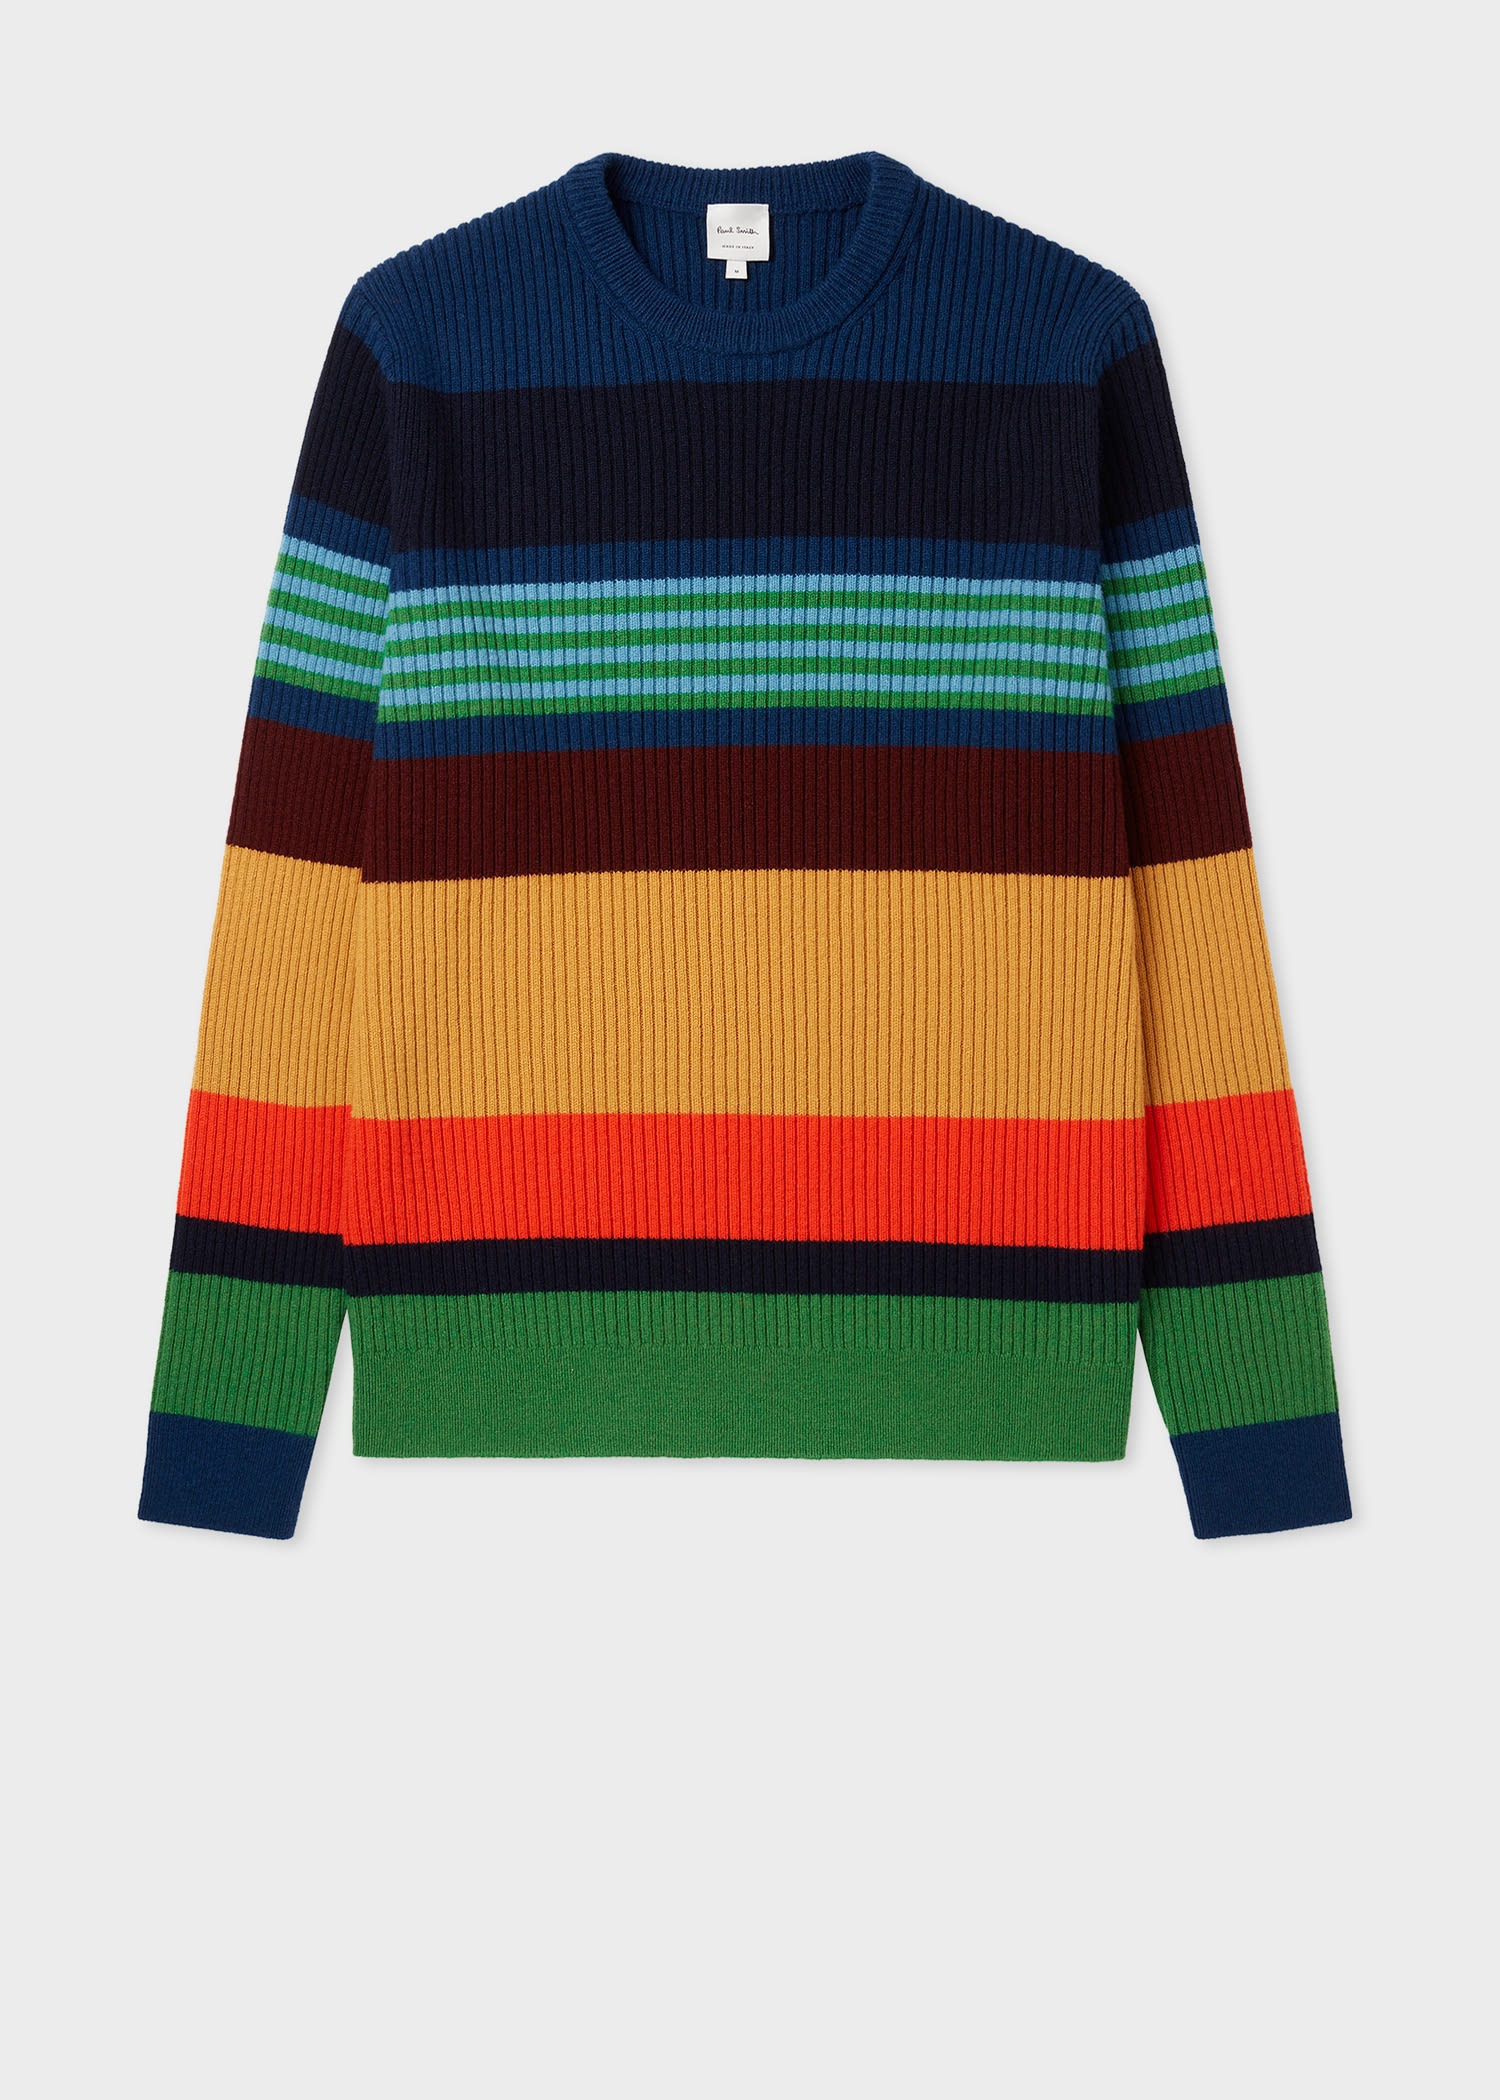 Men's Knitwear | Sweaters, Jumpers & Cardigans for Men - Paul Smith